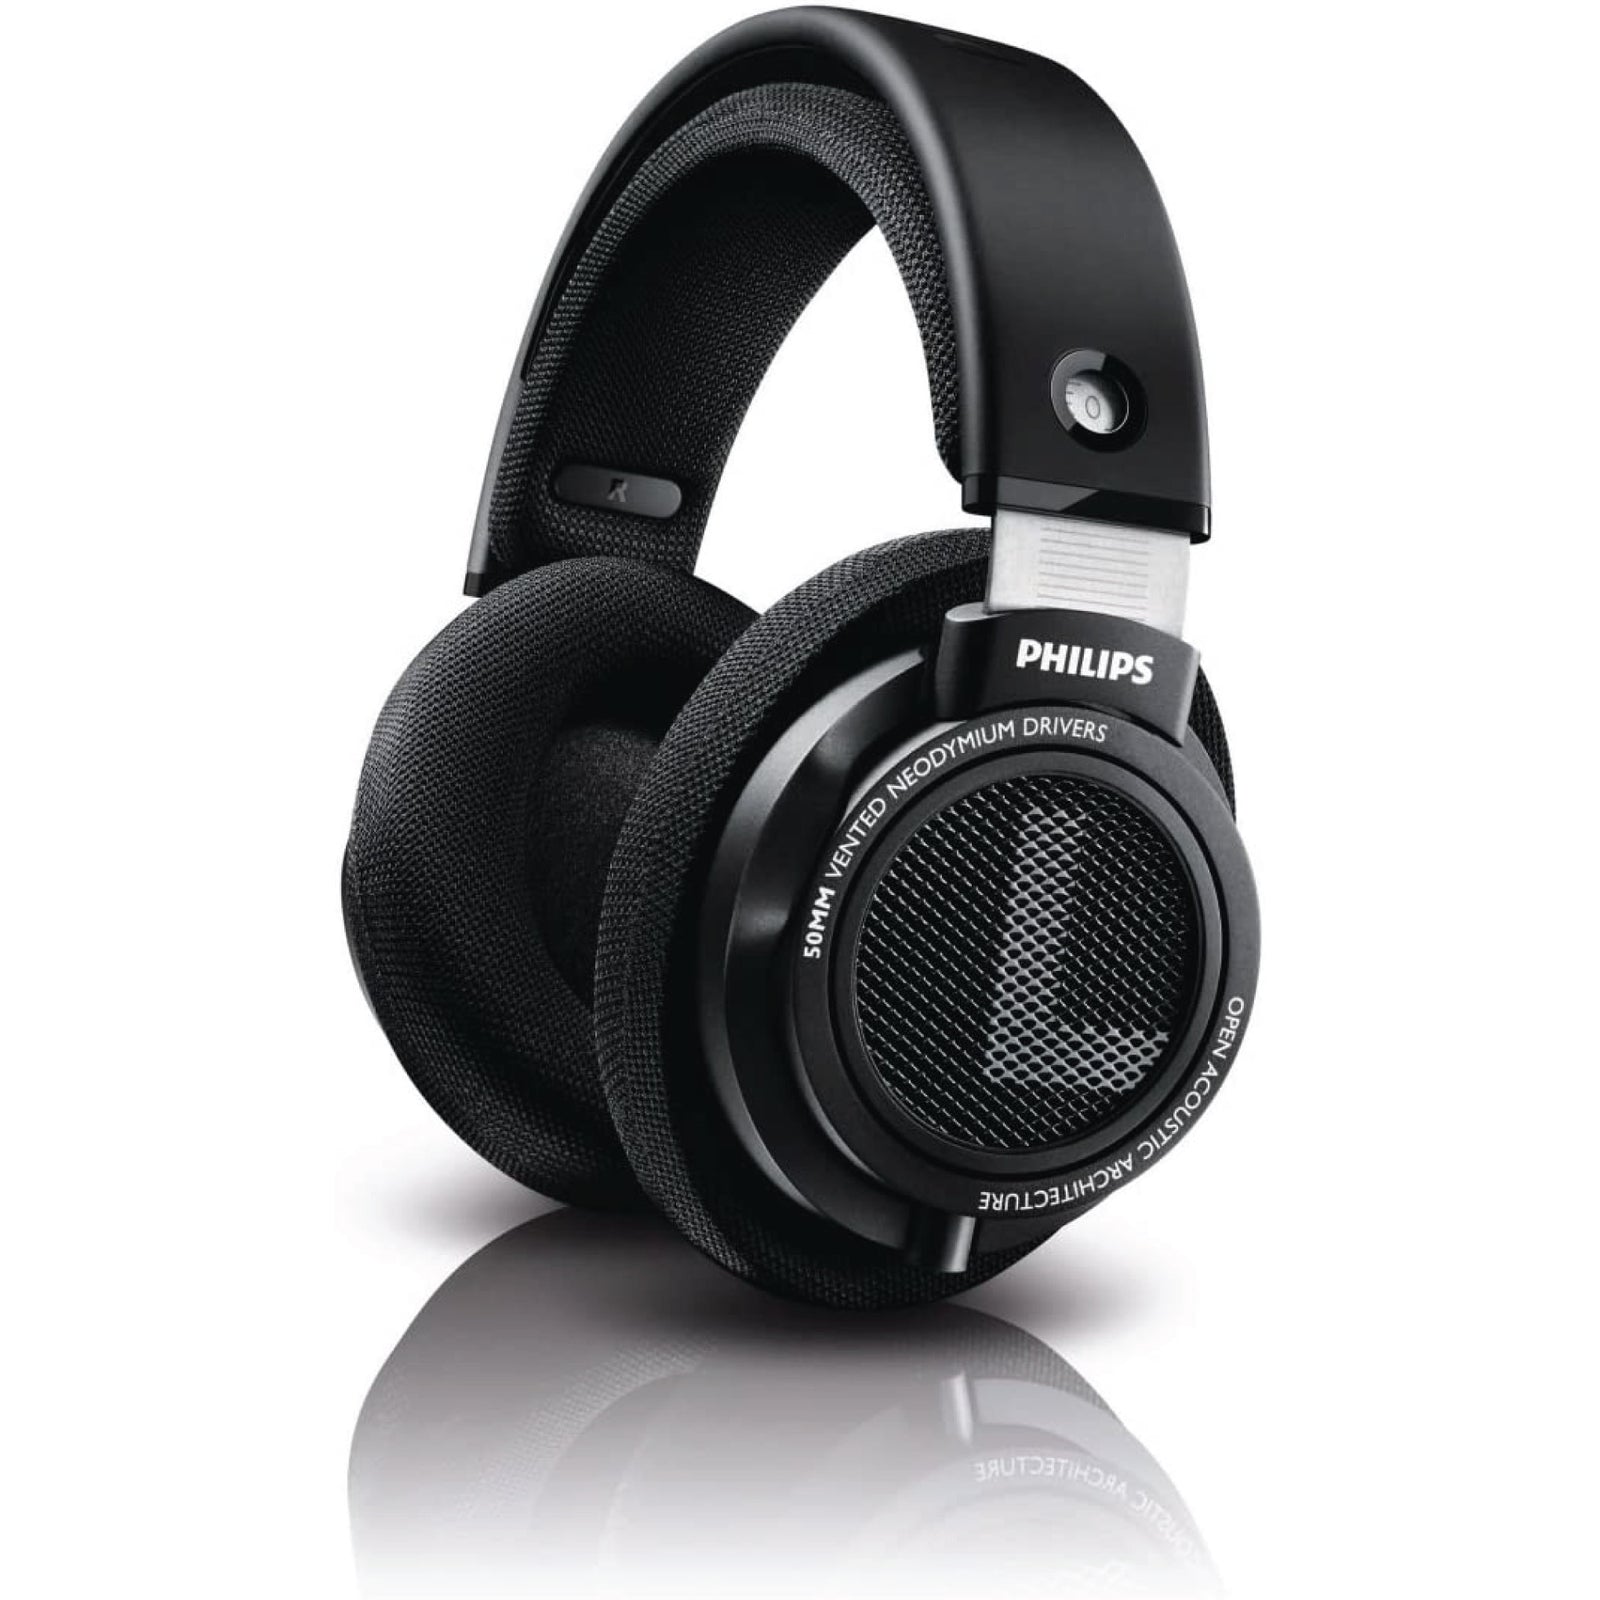 Philips SHP9500 HiFi Precision Stereo Over-Ear Headphones